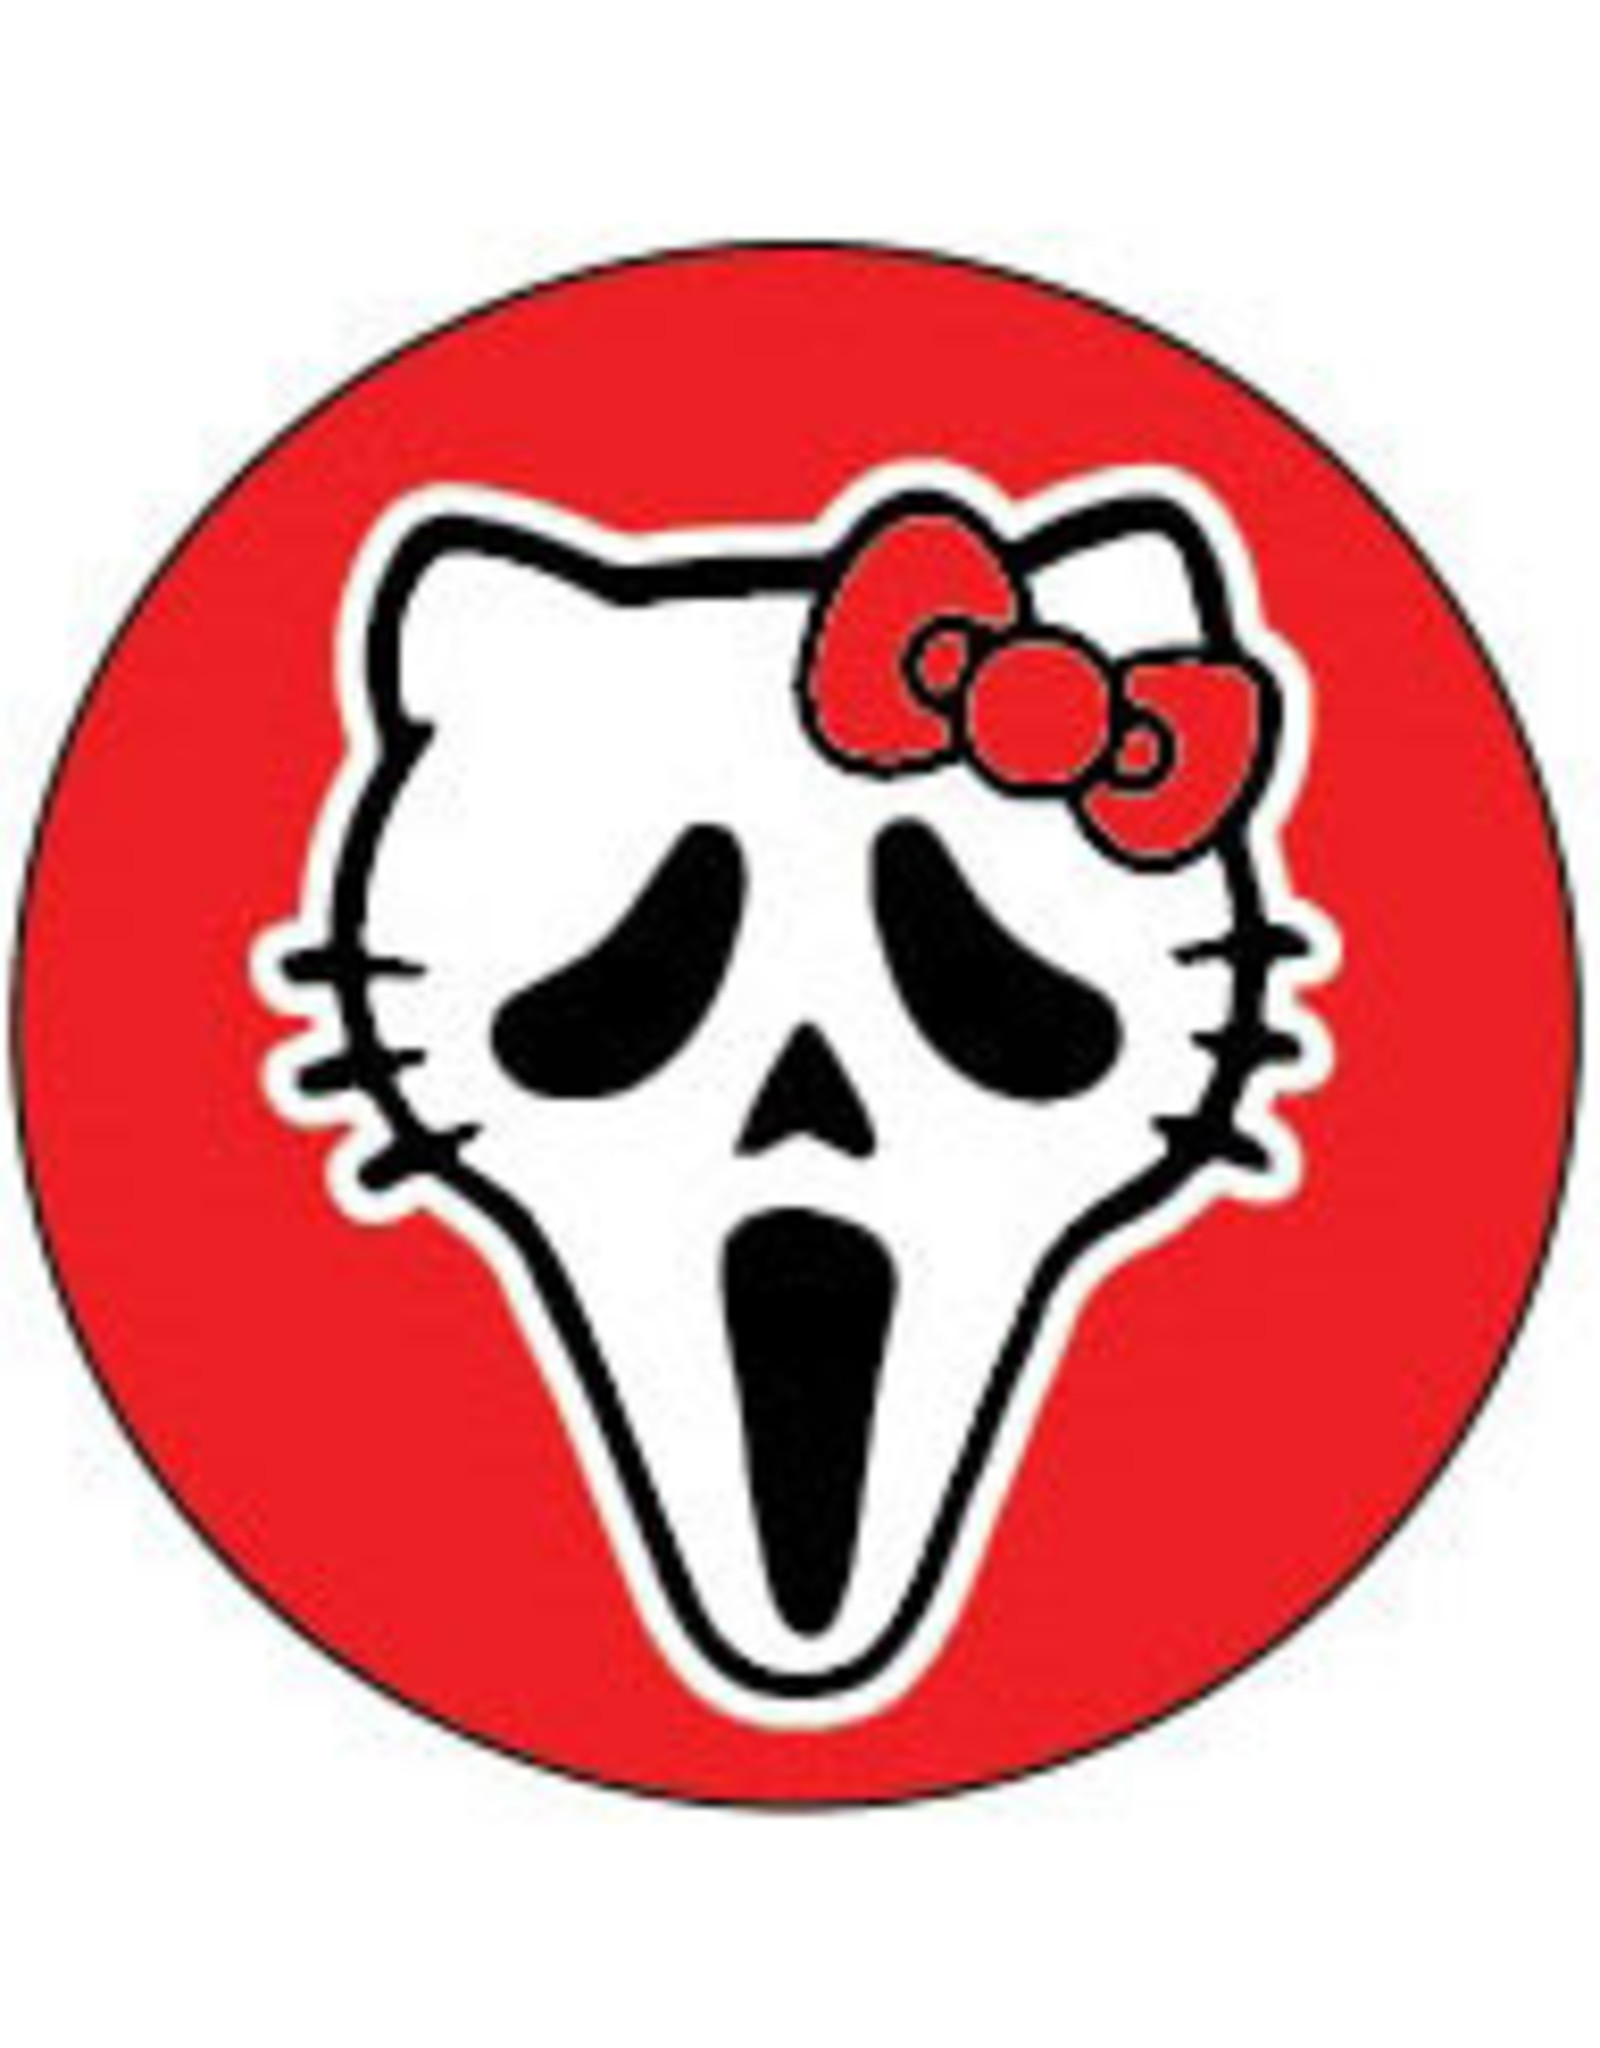 Scream Kitty Button